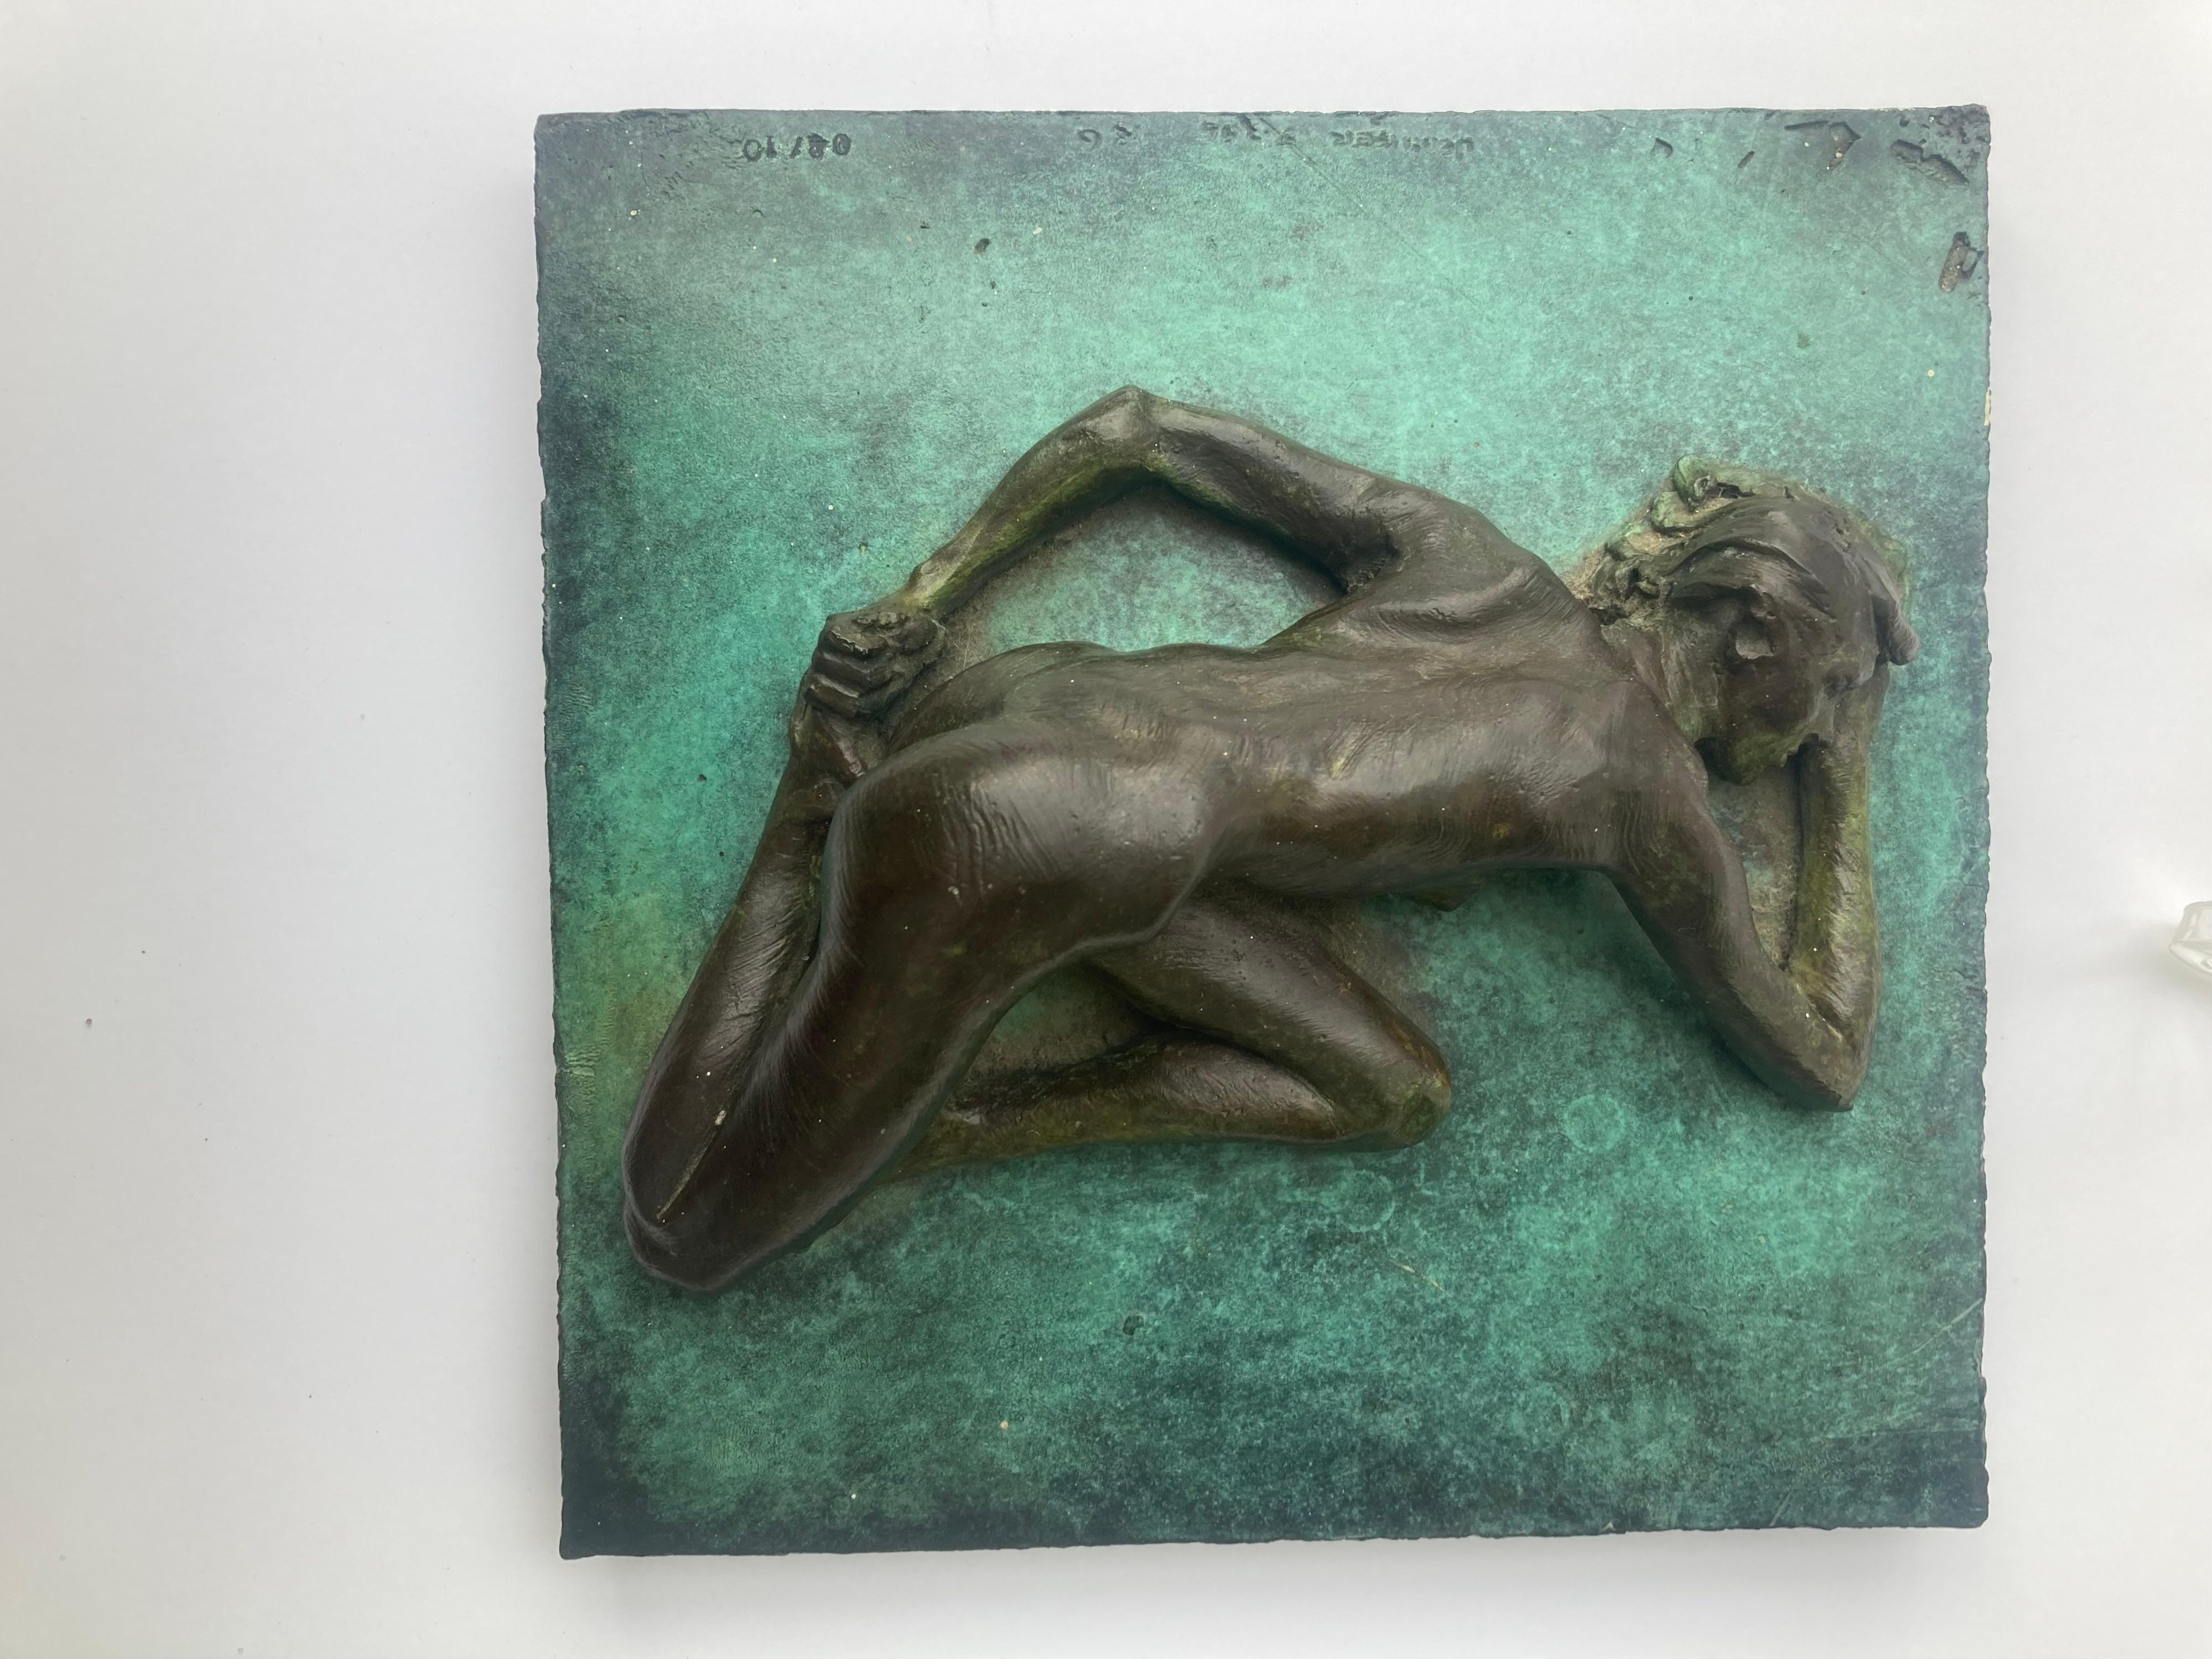 Postmoderne Sculpture de nu en bronze de Robert Graham, / mur/table TitreJennifer4/10,1996.RG en vente